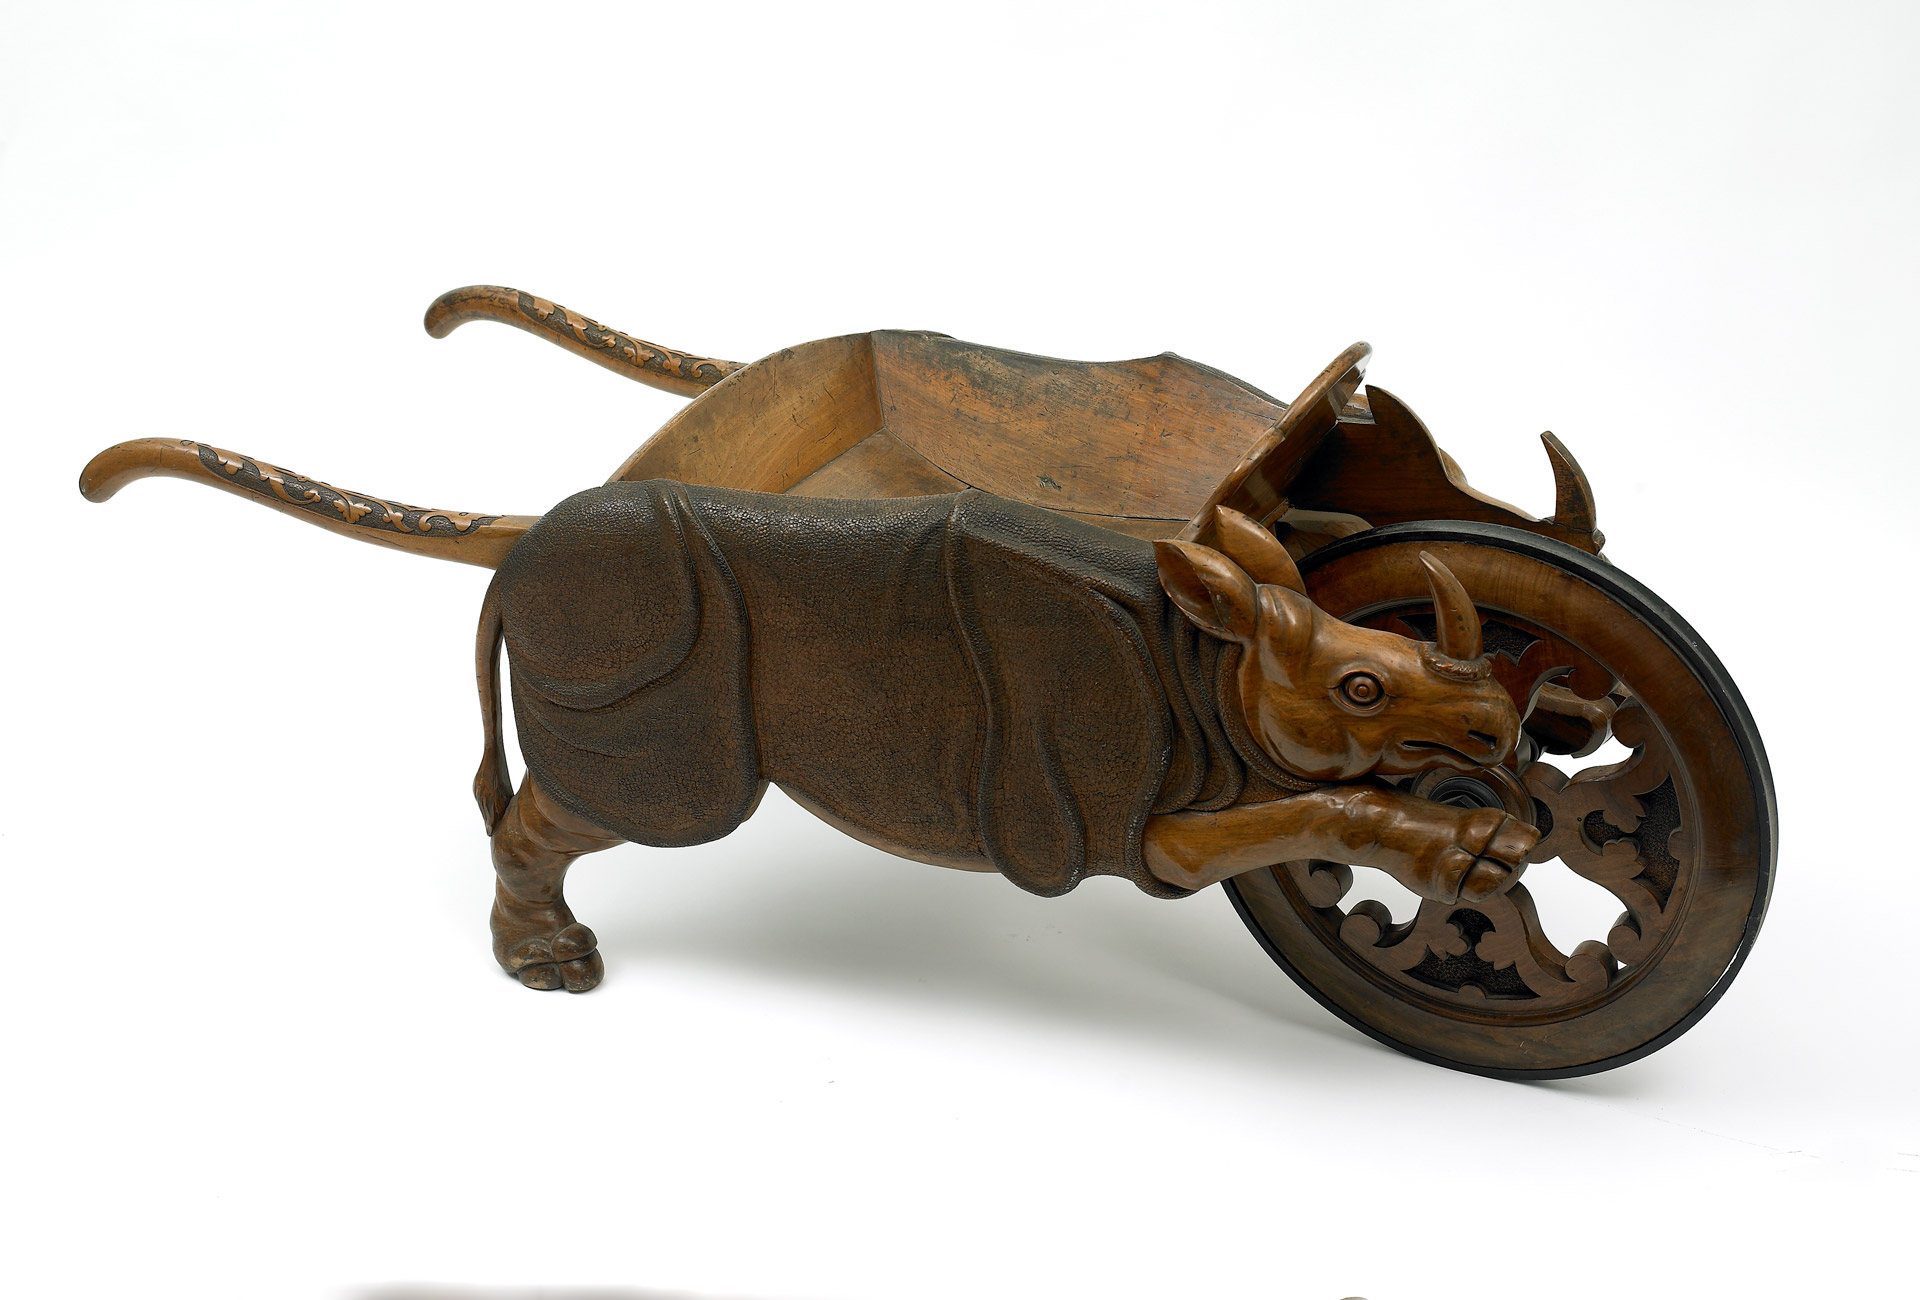 A wooden wheelbarrow made to look like a rhinoceros